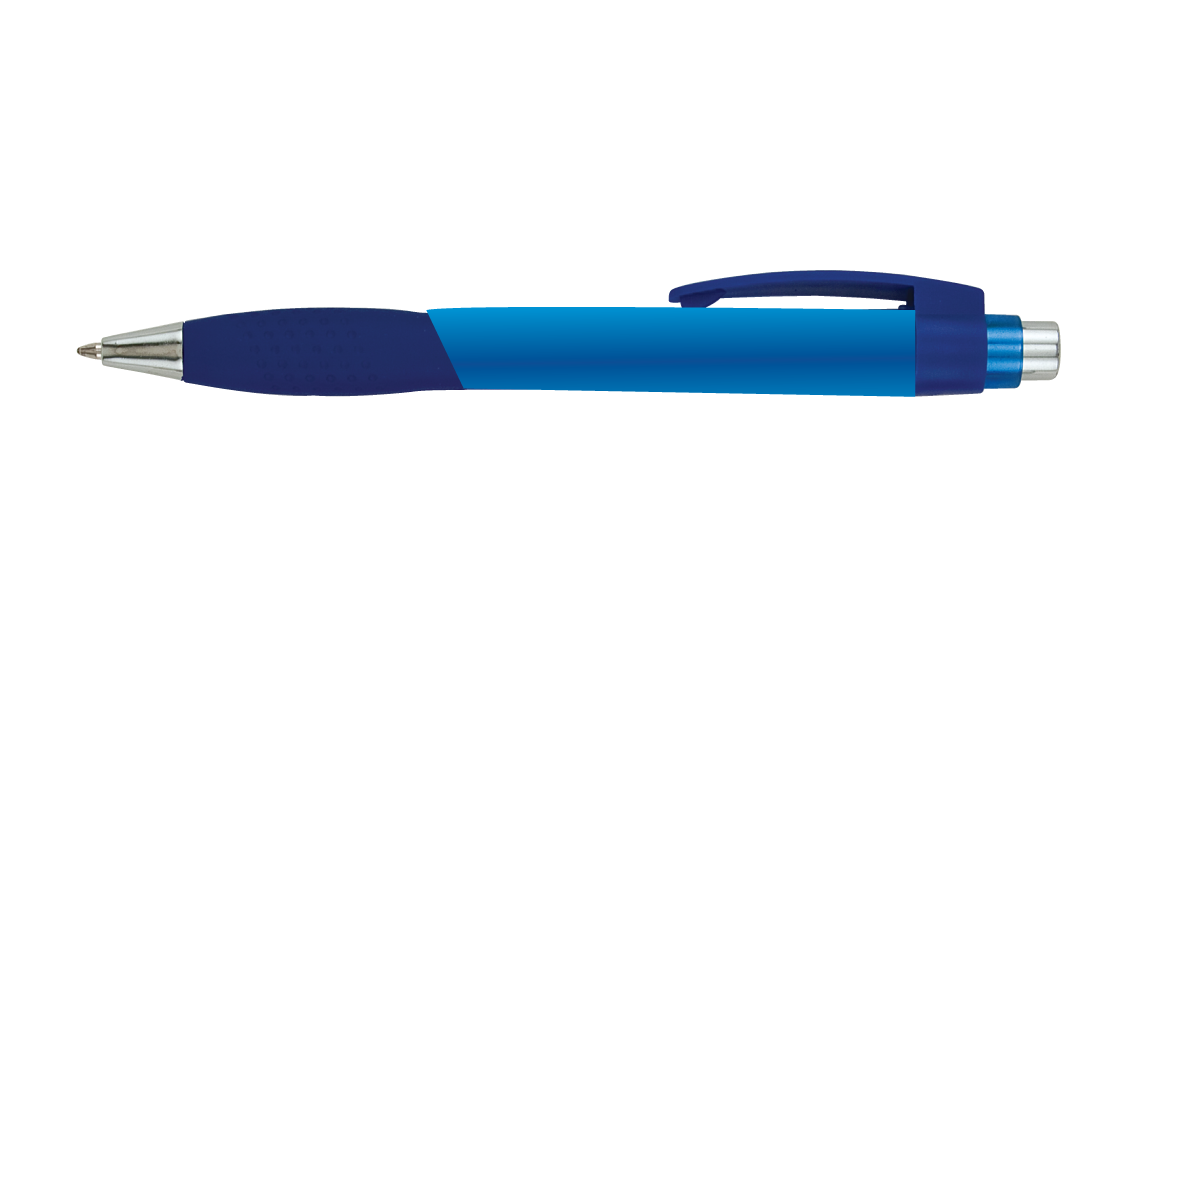 Blue Equinox Super Glide Pen